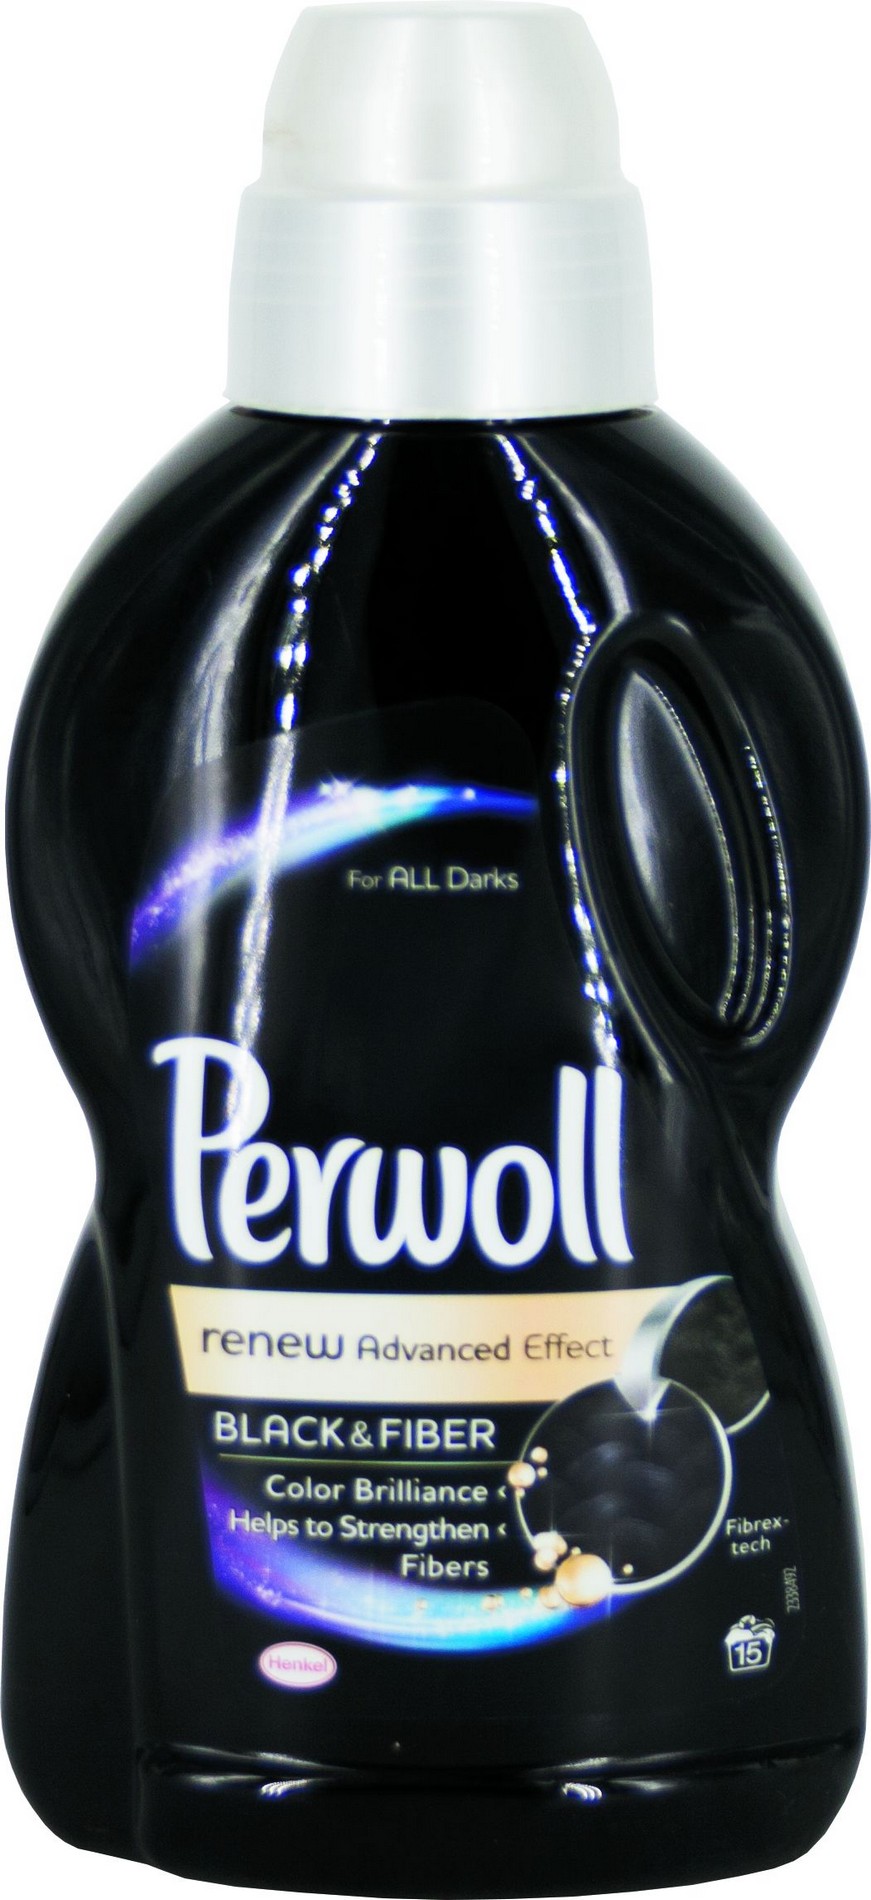 DETERGENT LICHID PERWOLL RENEW BLACK 15 SPALARI 900ML # 8 buc